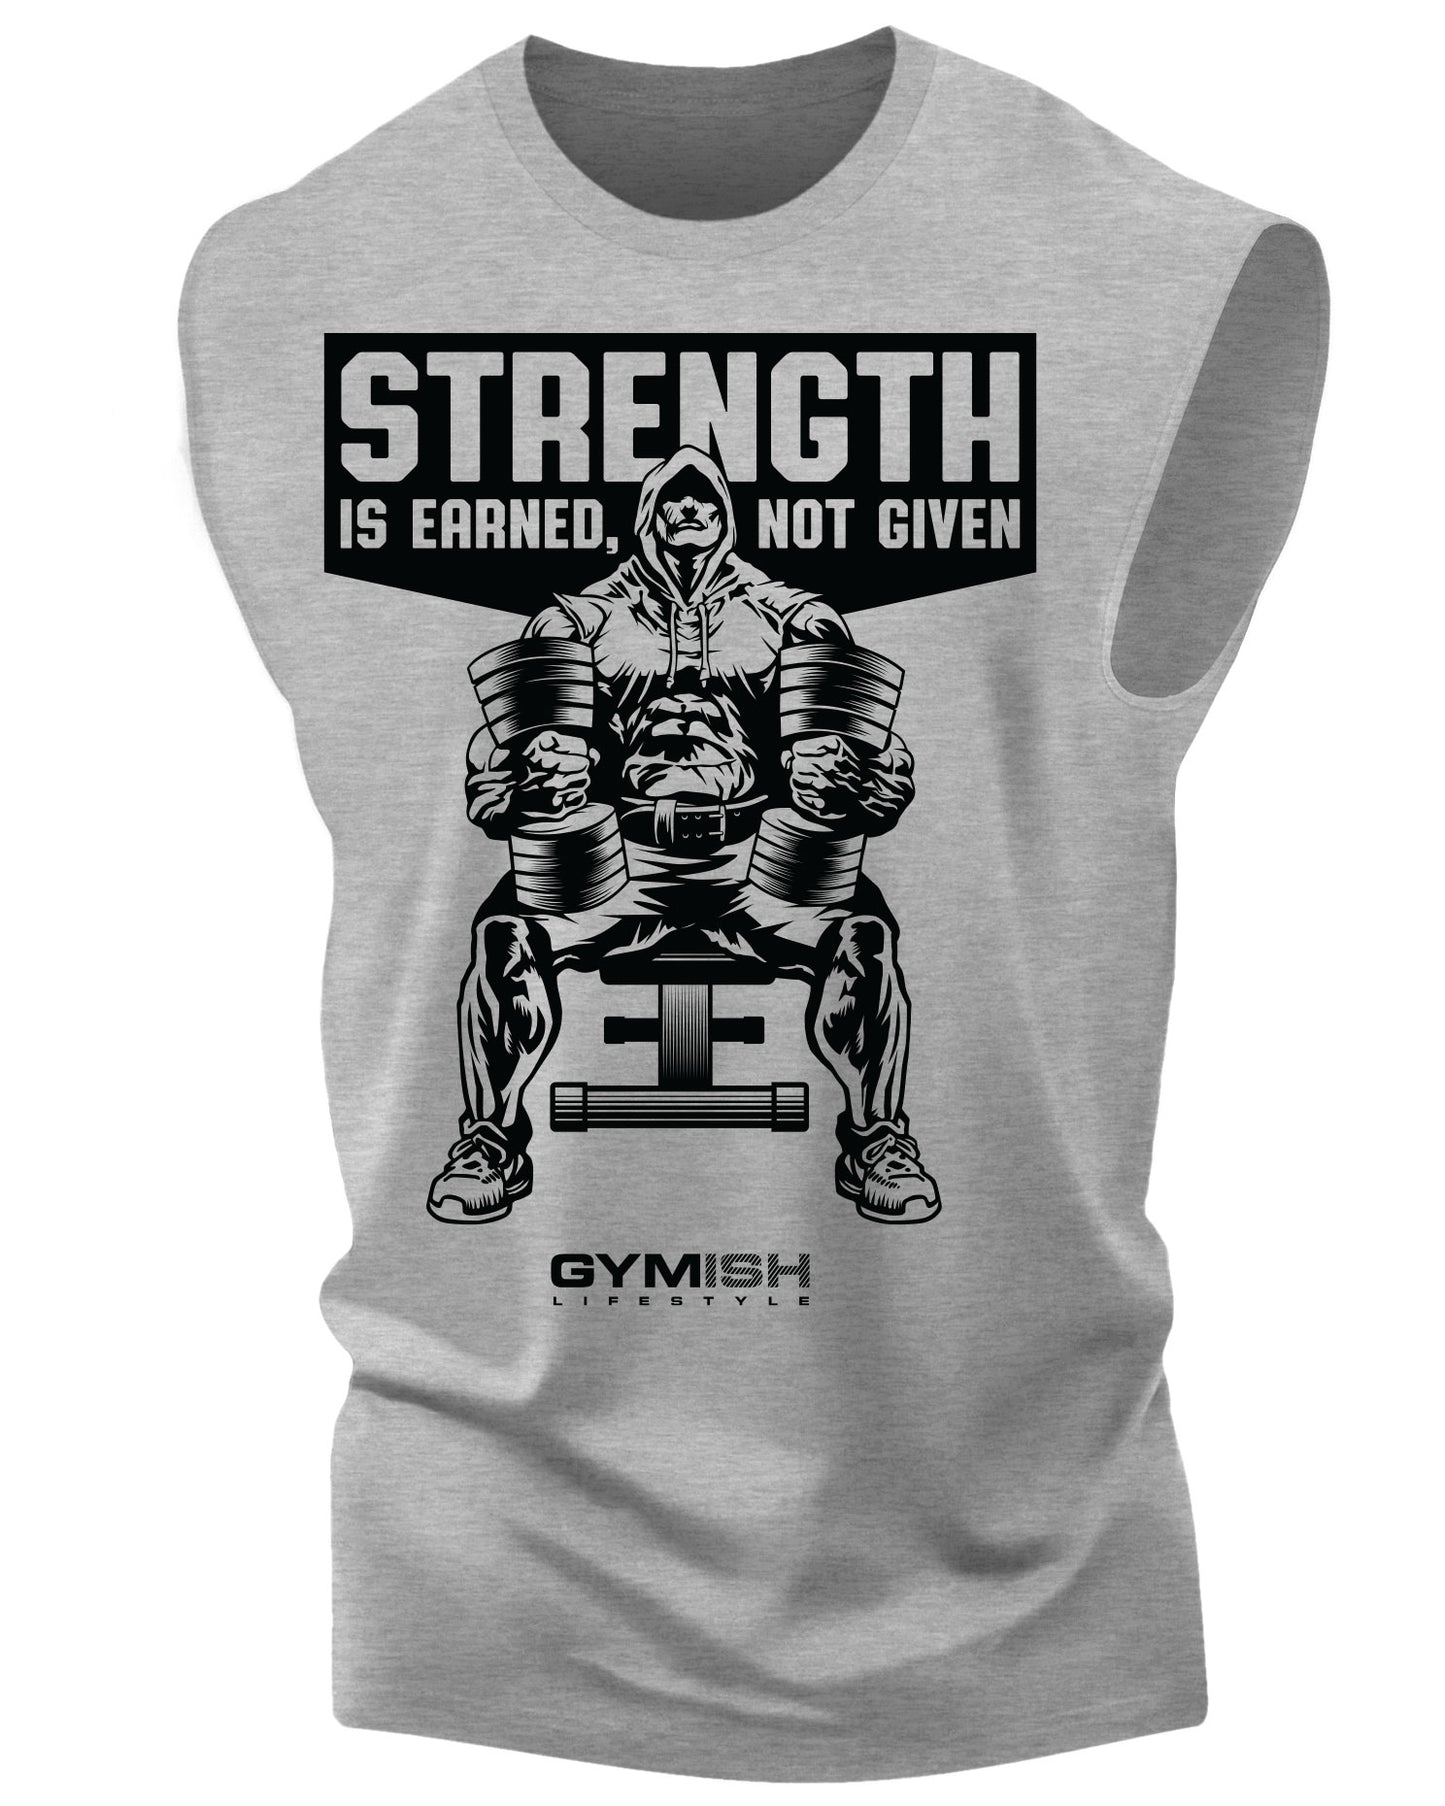 Strength Is Earned, Not Given Muscle Tank Top, Sleeveless Workout Shirt, Lifting Shirt, Gym Shirt